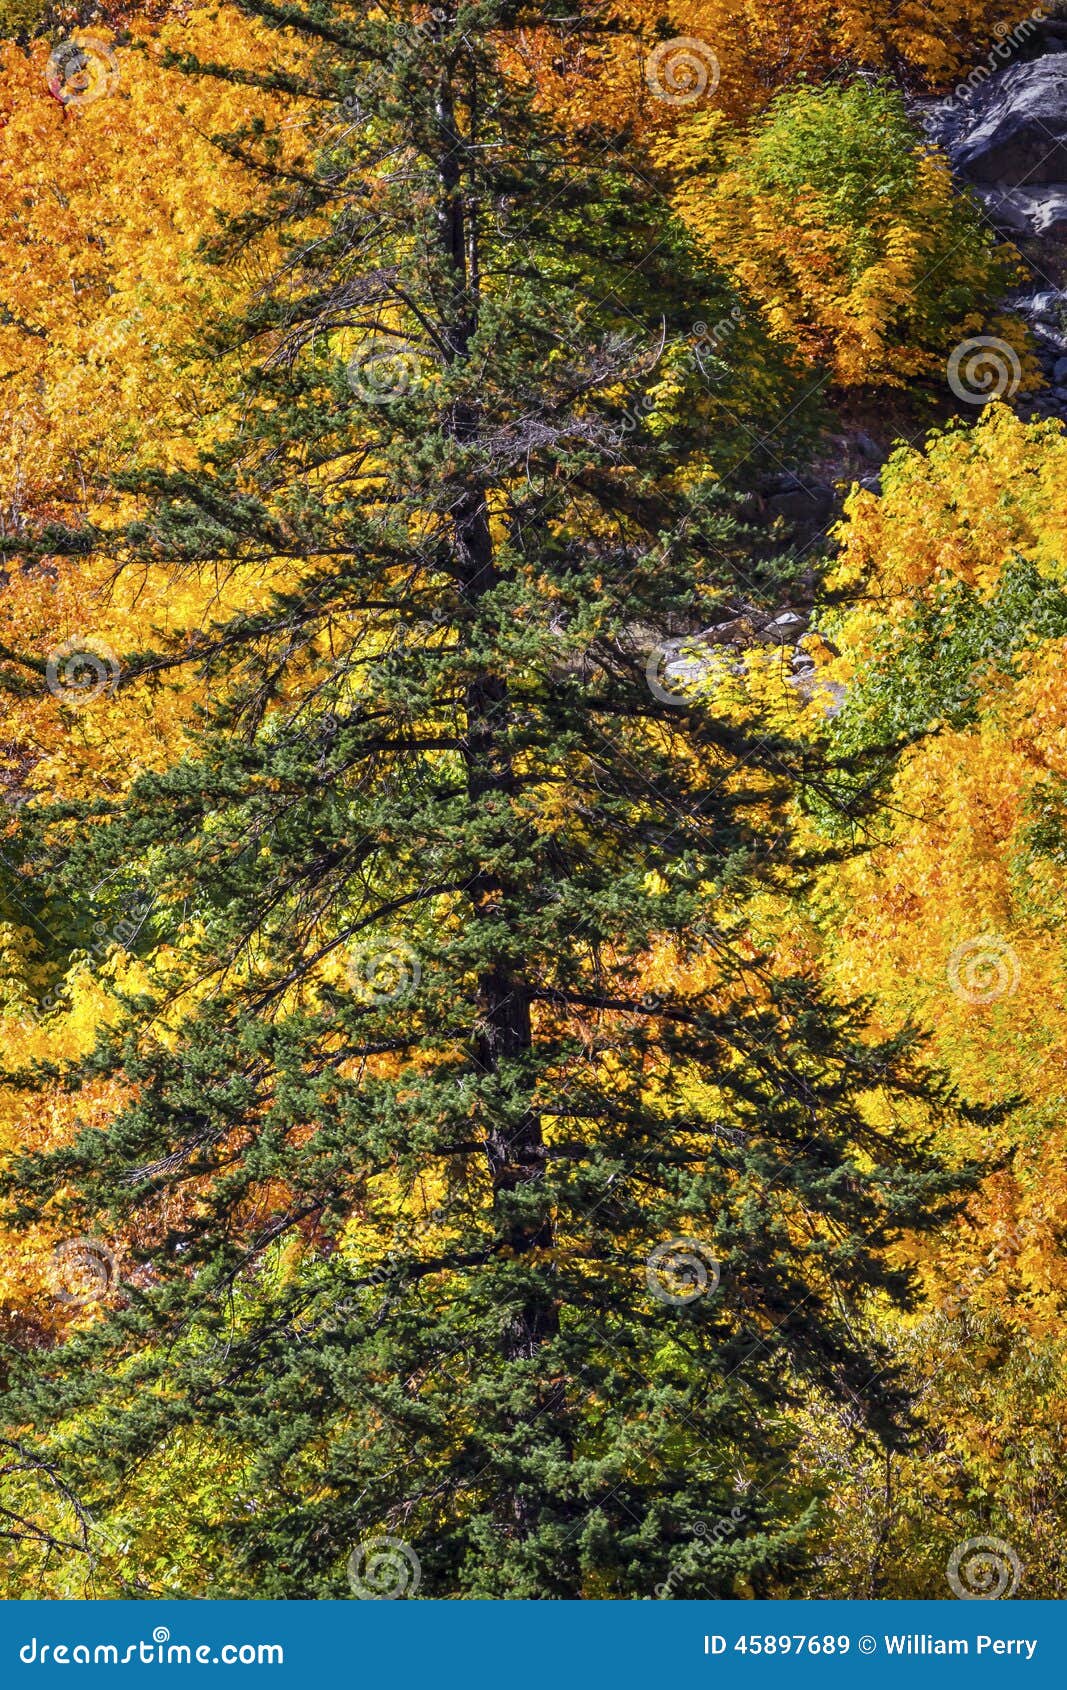 fall yellow green colors mountain stevens pass washington